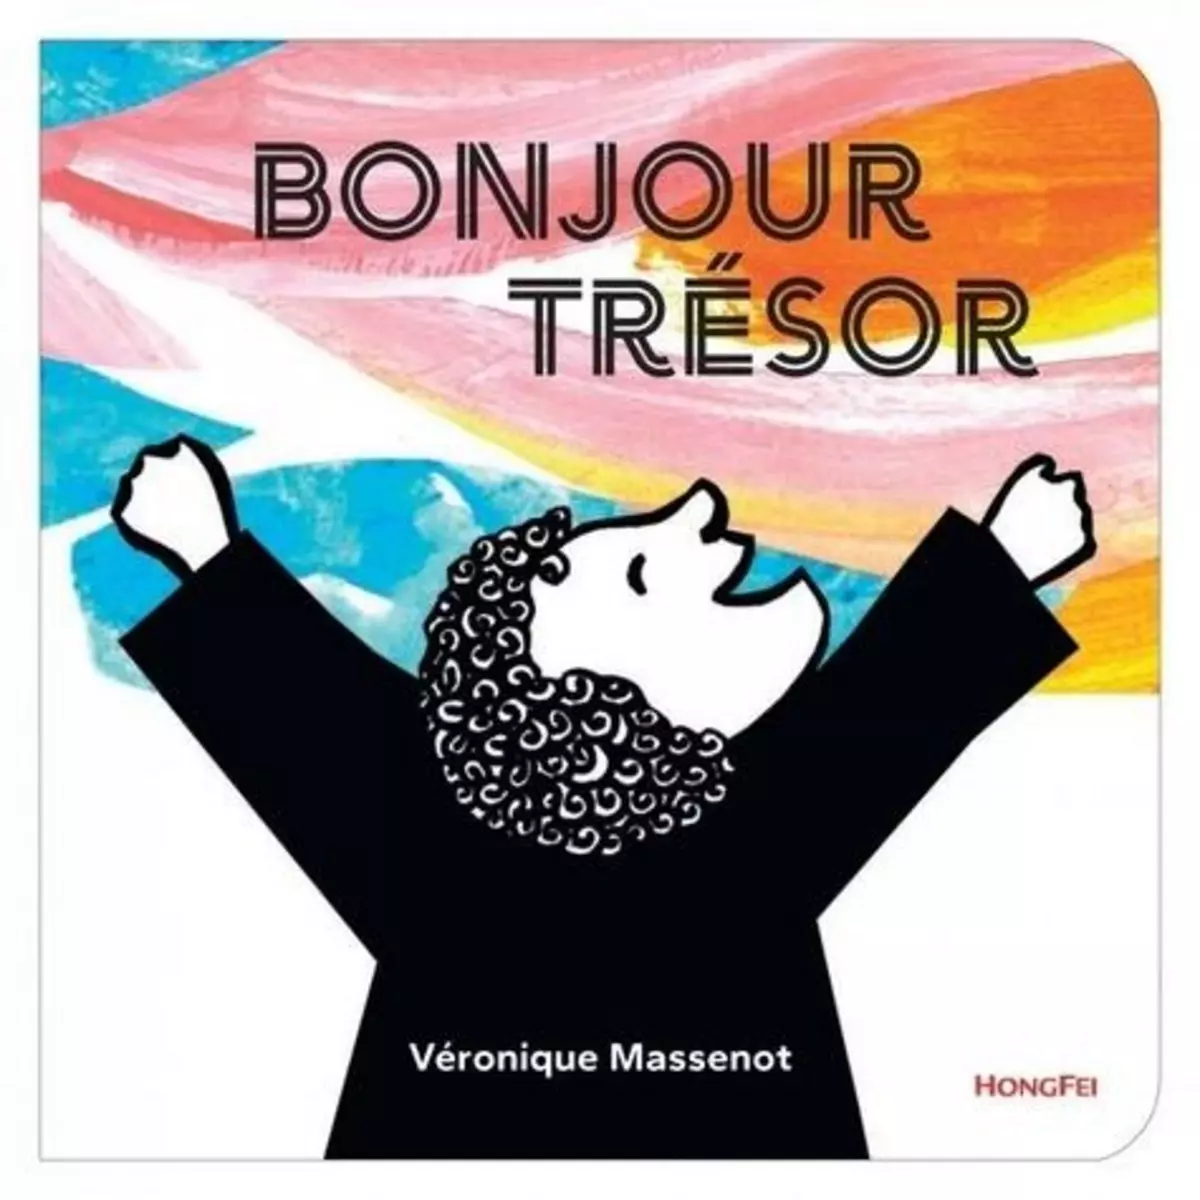  BONJOUR TRESOR, Massenot Véronique